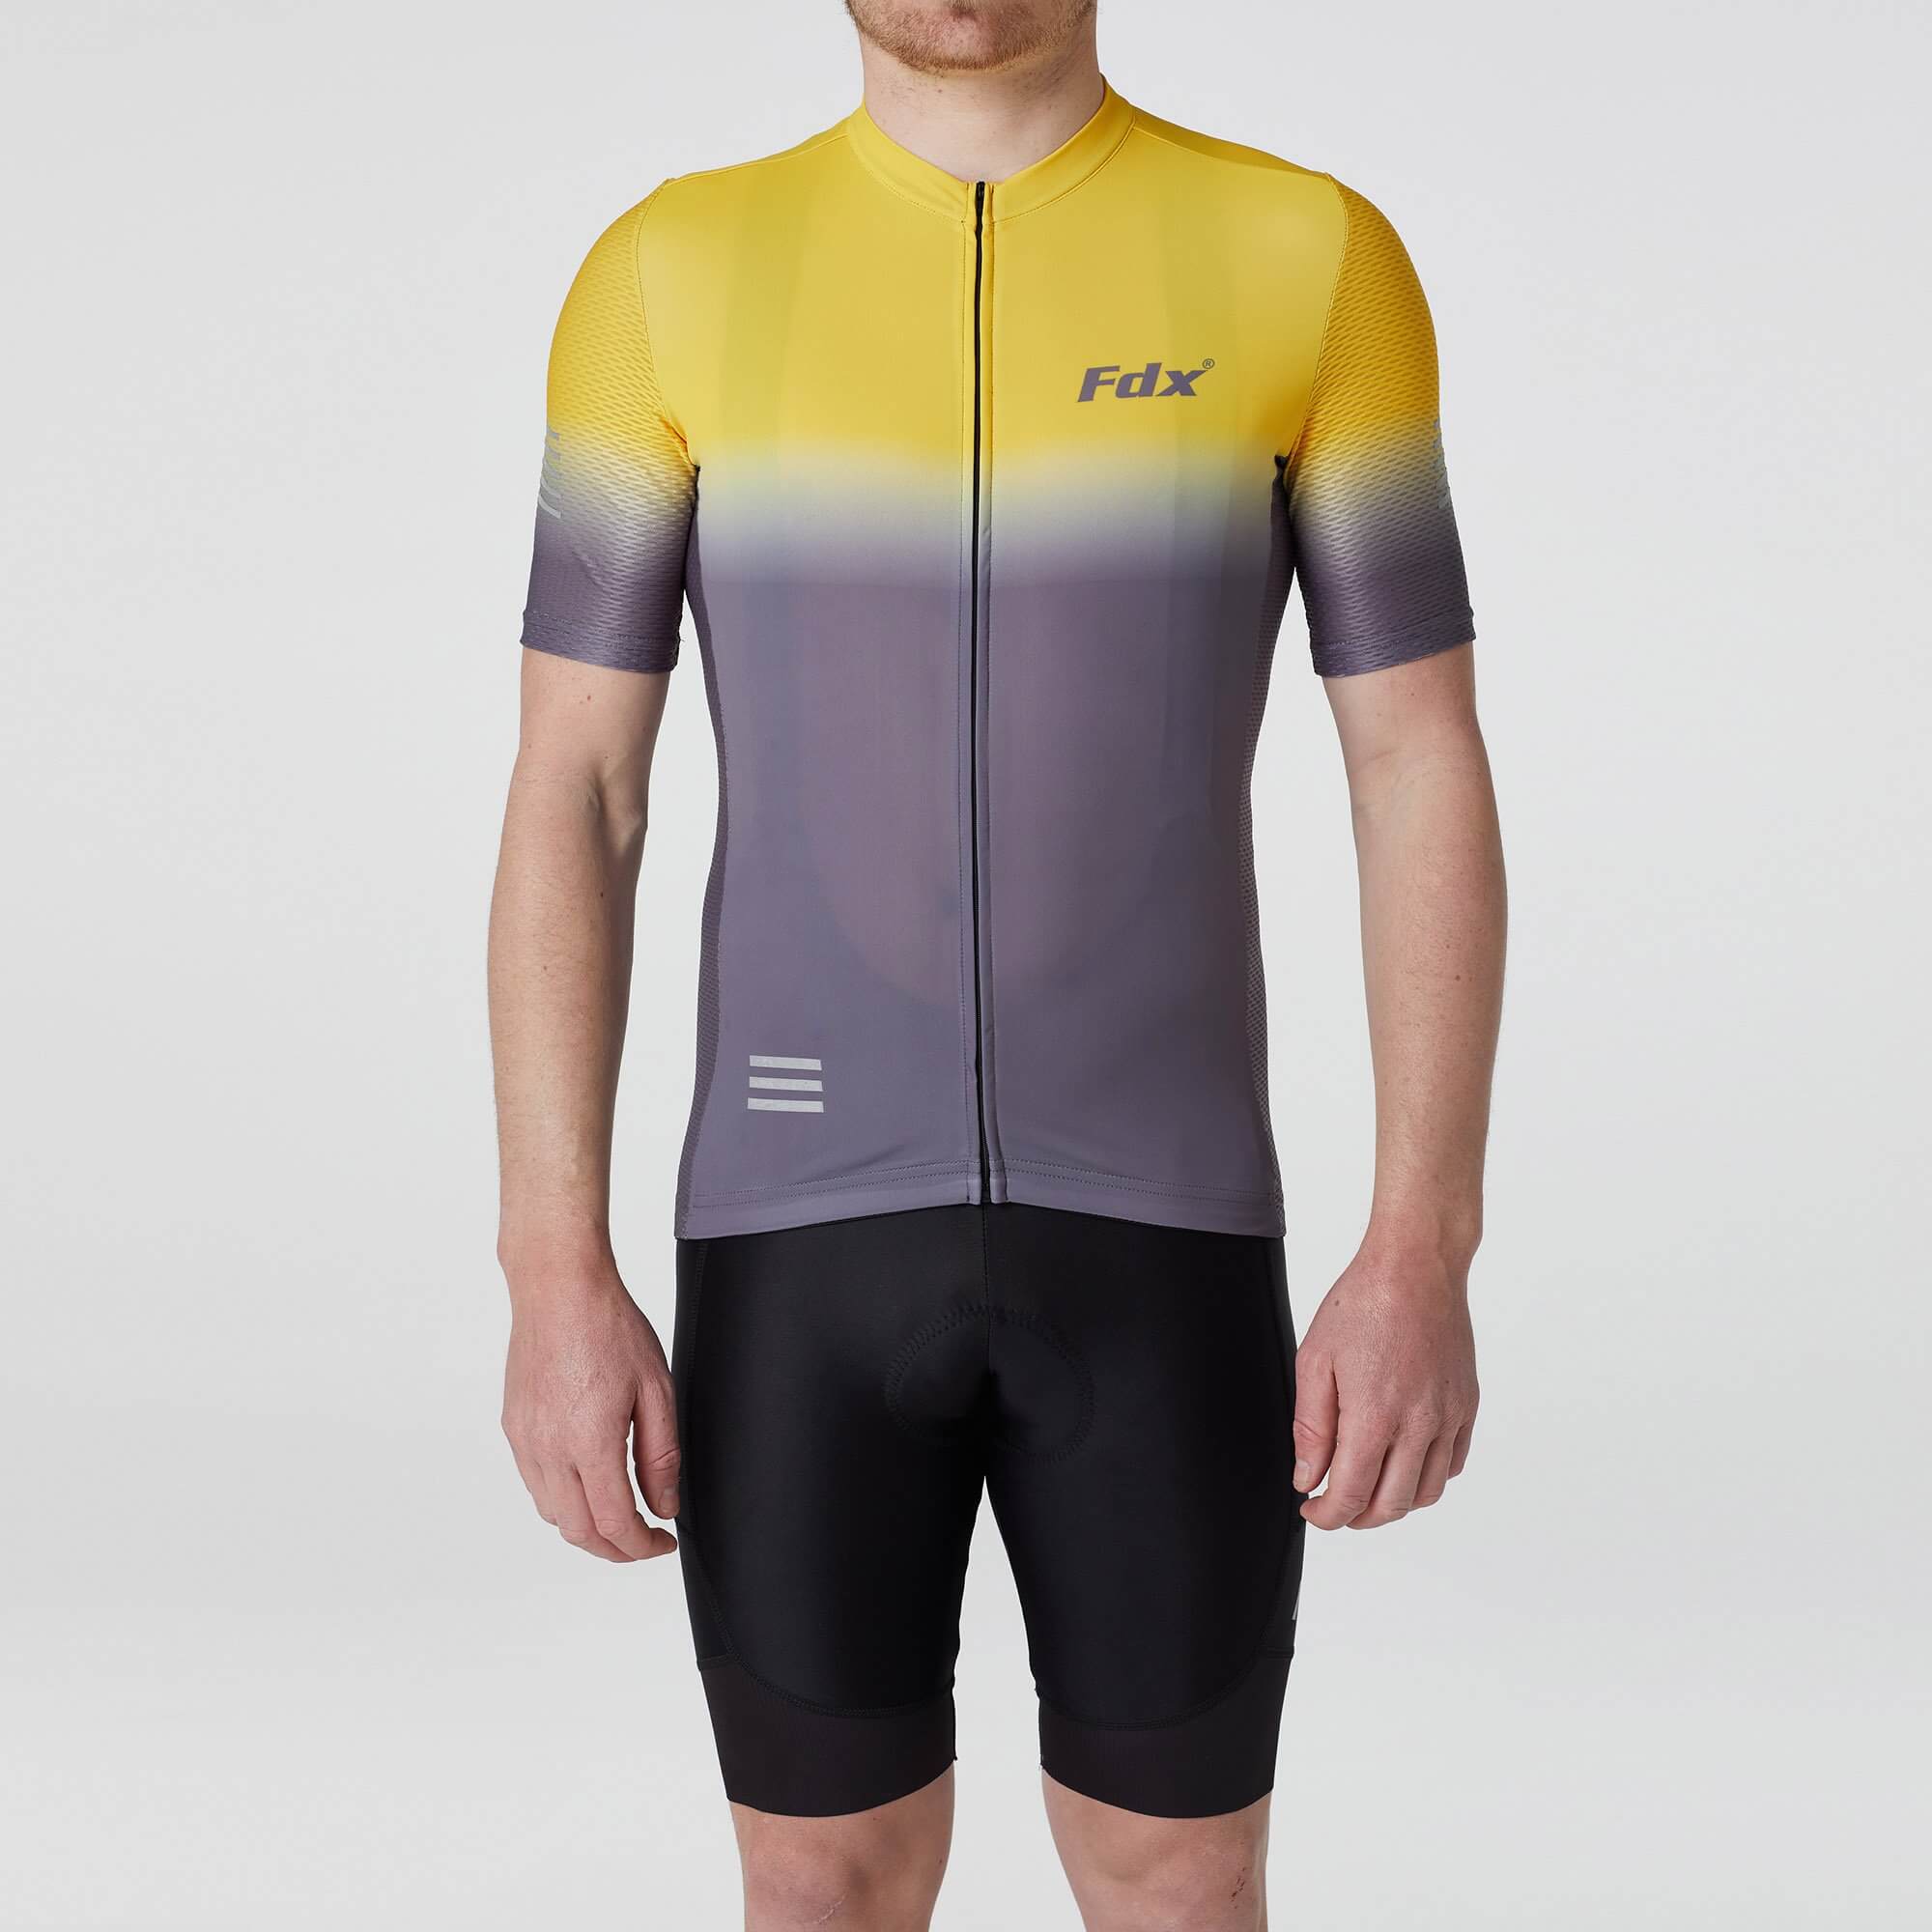 Fdx Mens Yellow & Grey Half Sleeve Summer Cycling Jersey Breathable lightweght Fabric, Bib Short Hi Viz Reflectors & Full Zipper Cycling Gear Australia